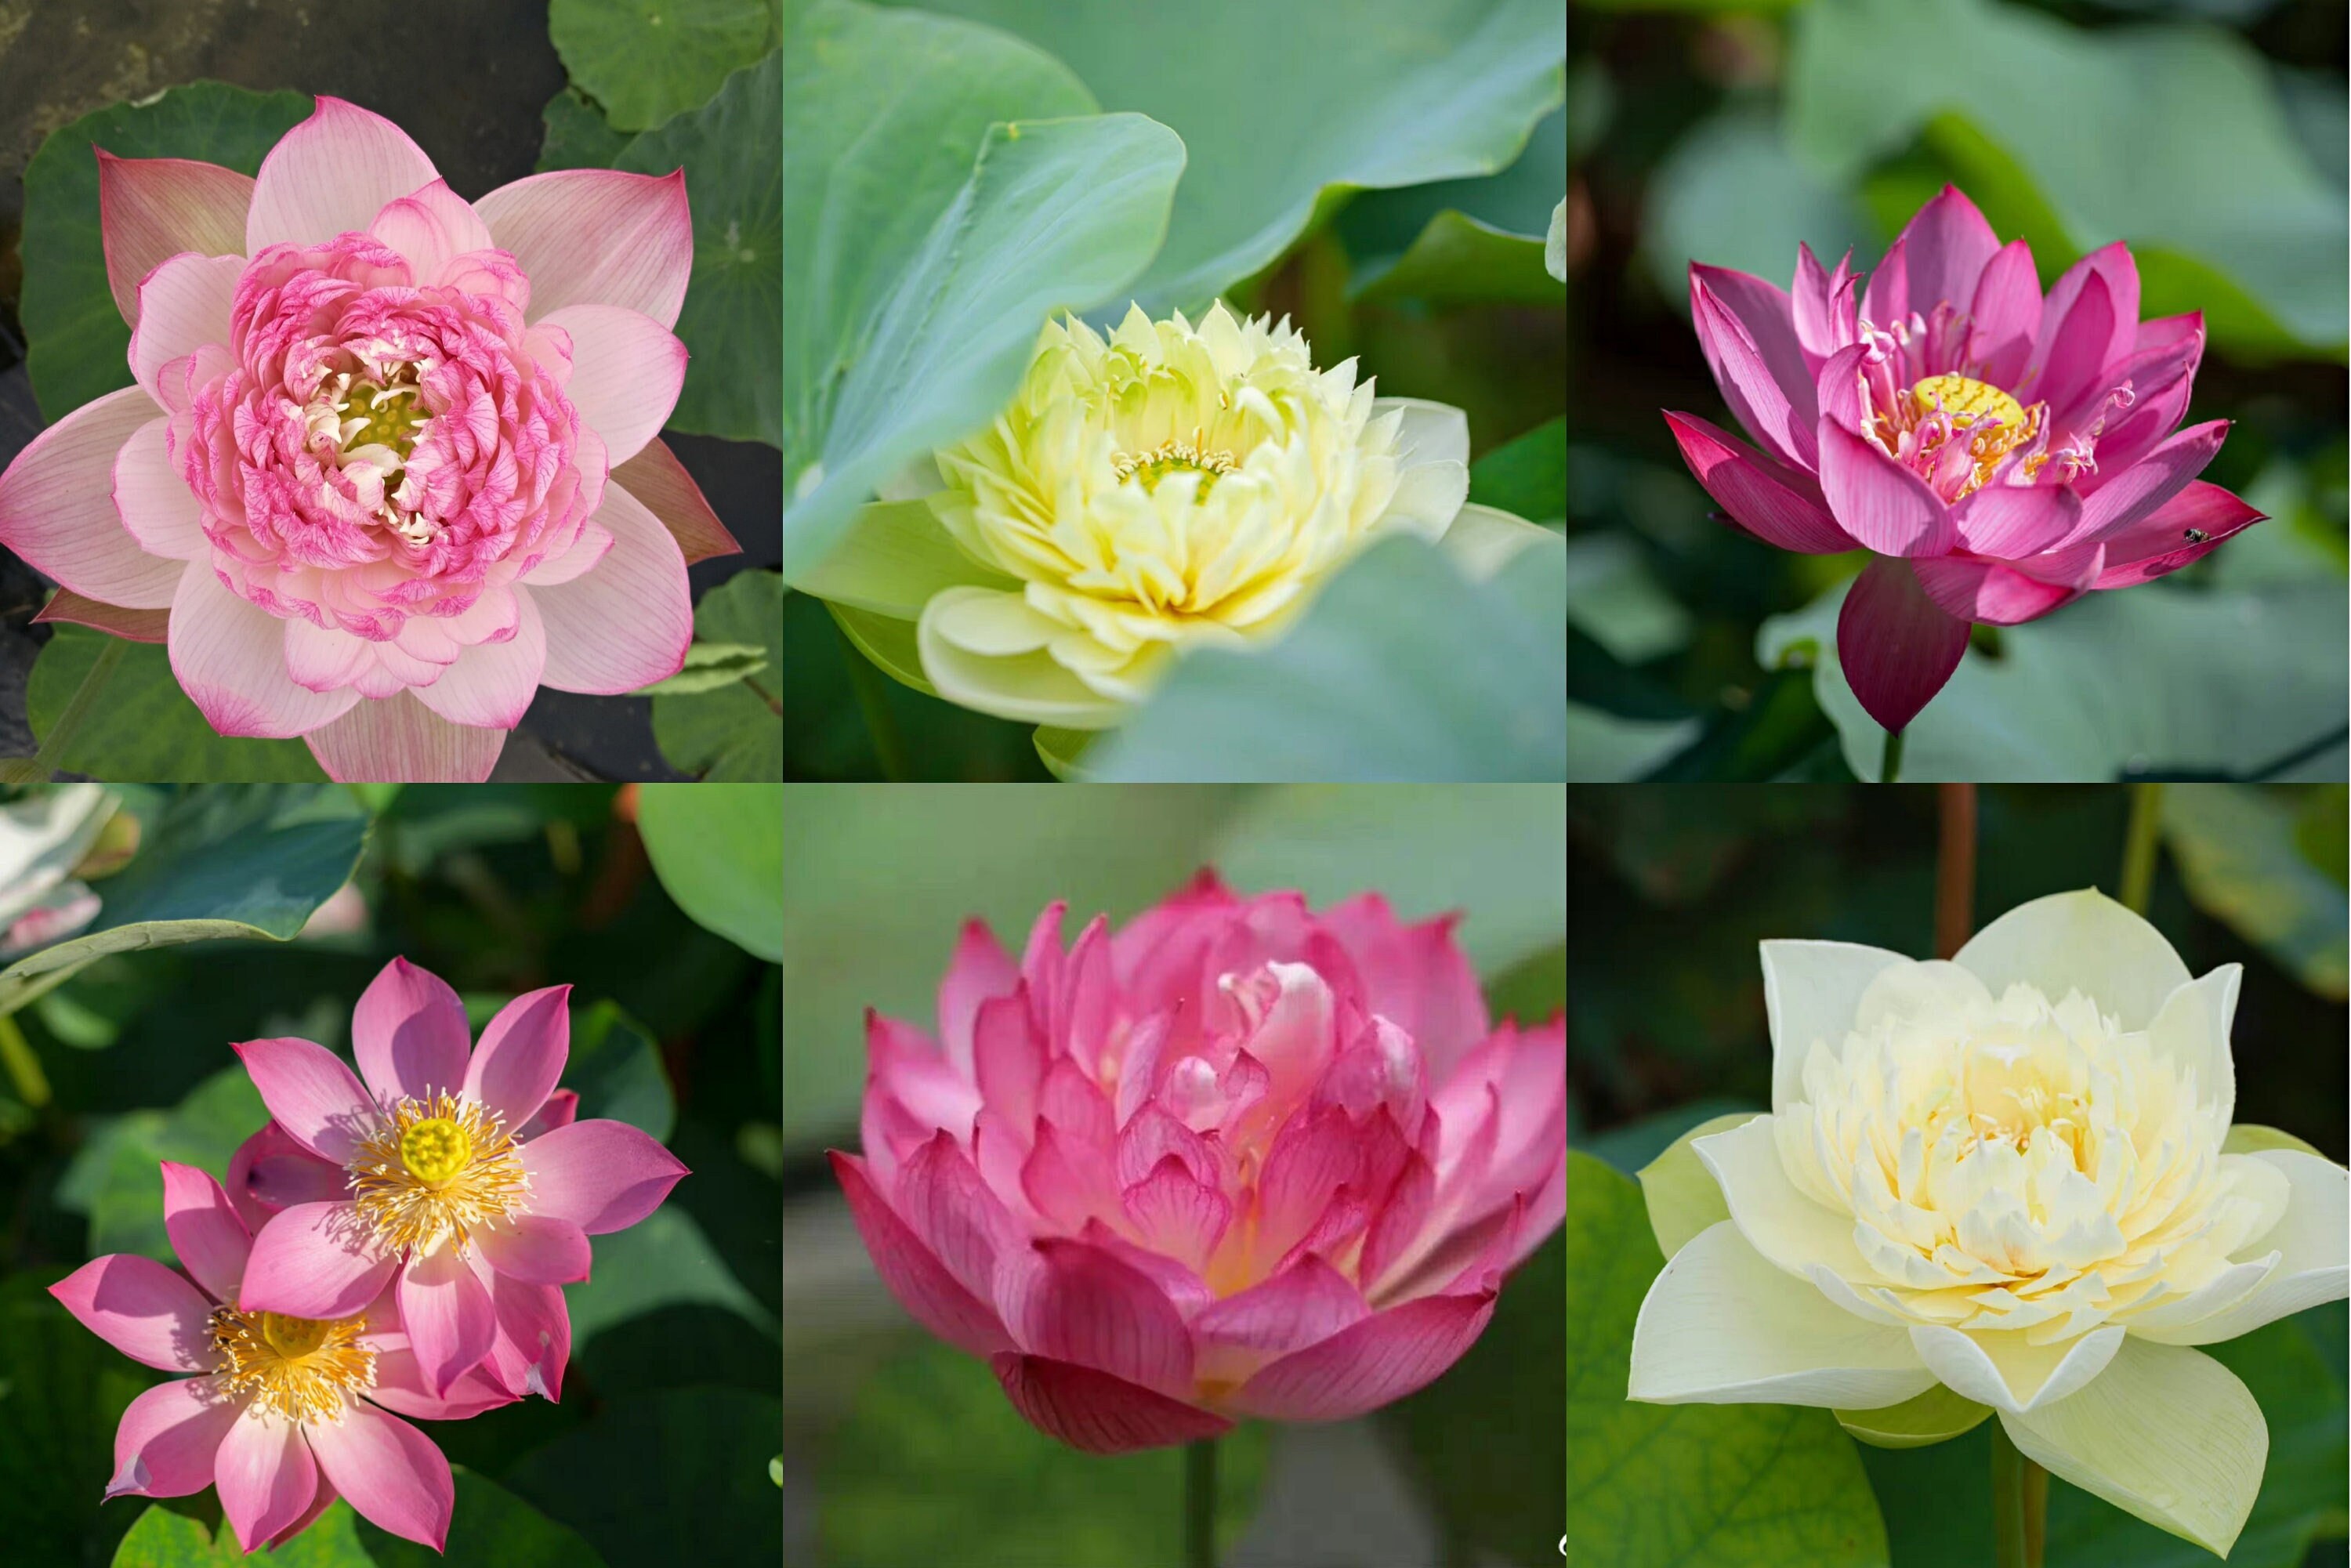 Mini Blue Lotus/Water Lily Flower/Bonsai Lotus/Ponds / Bow/5 Fresh Seeds